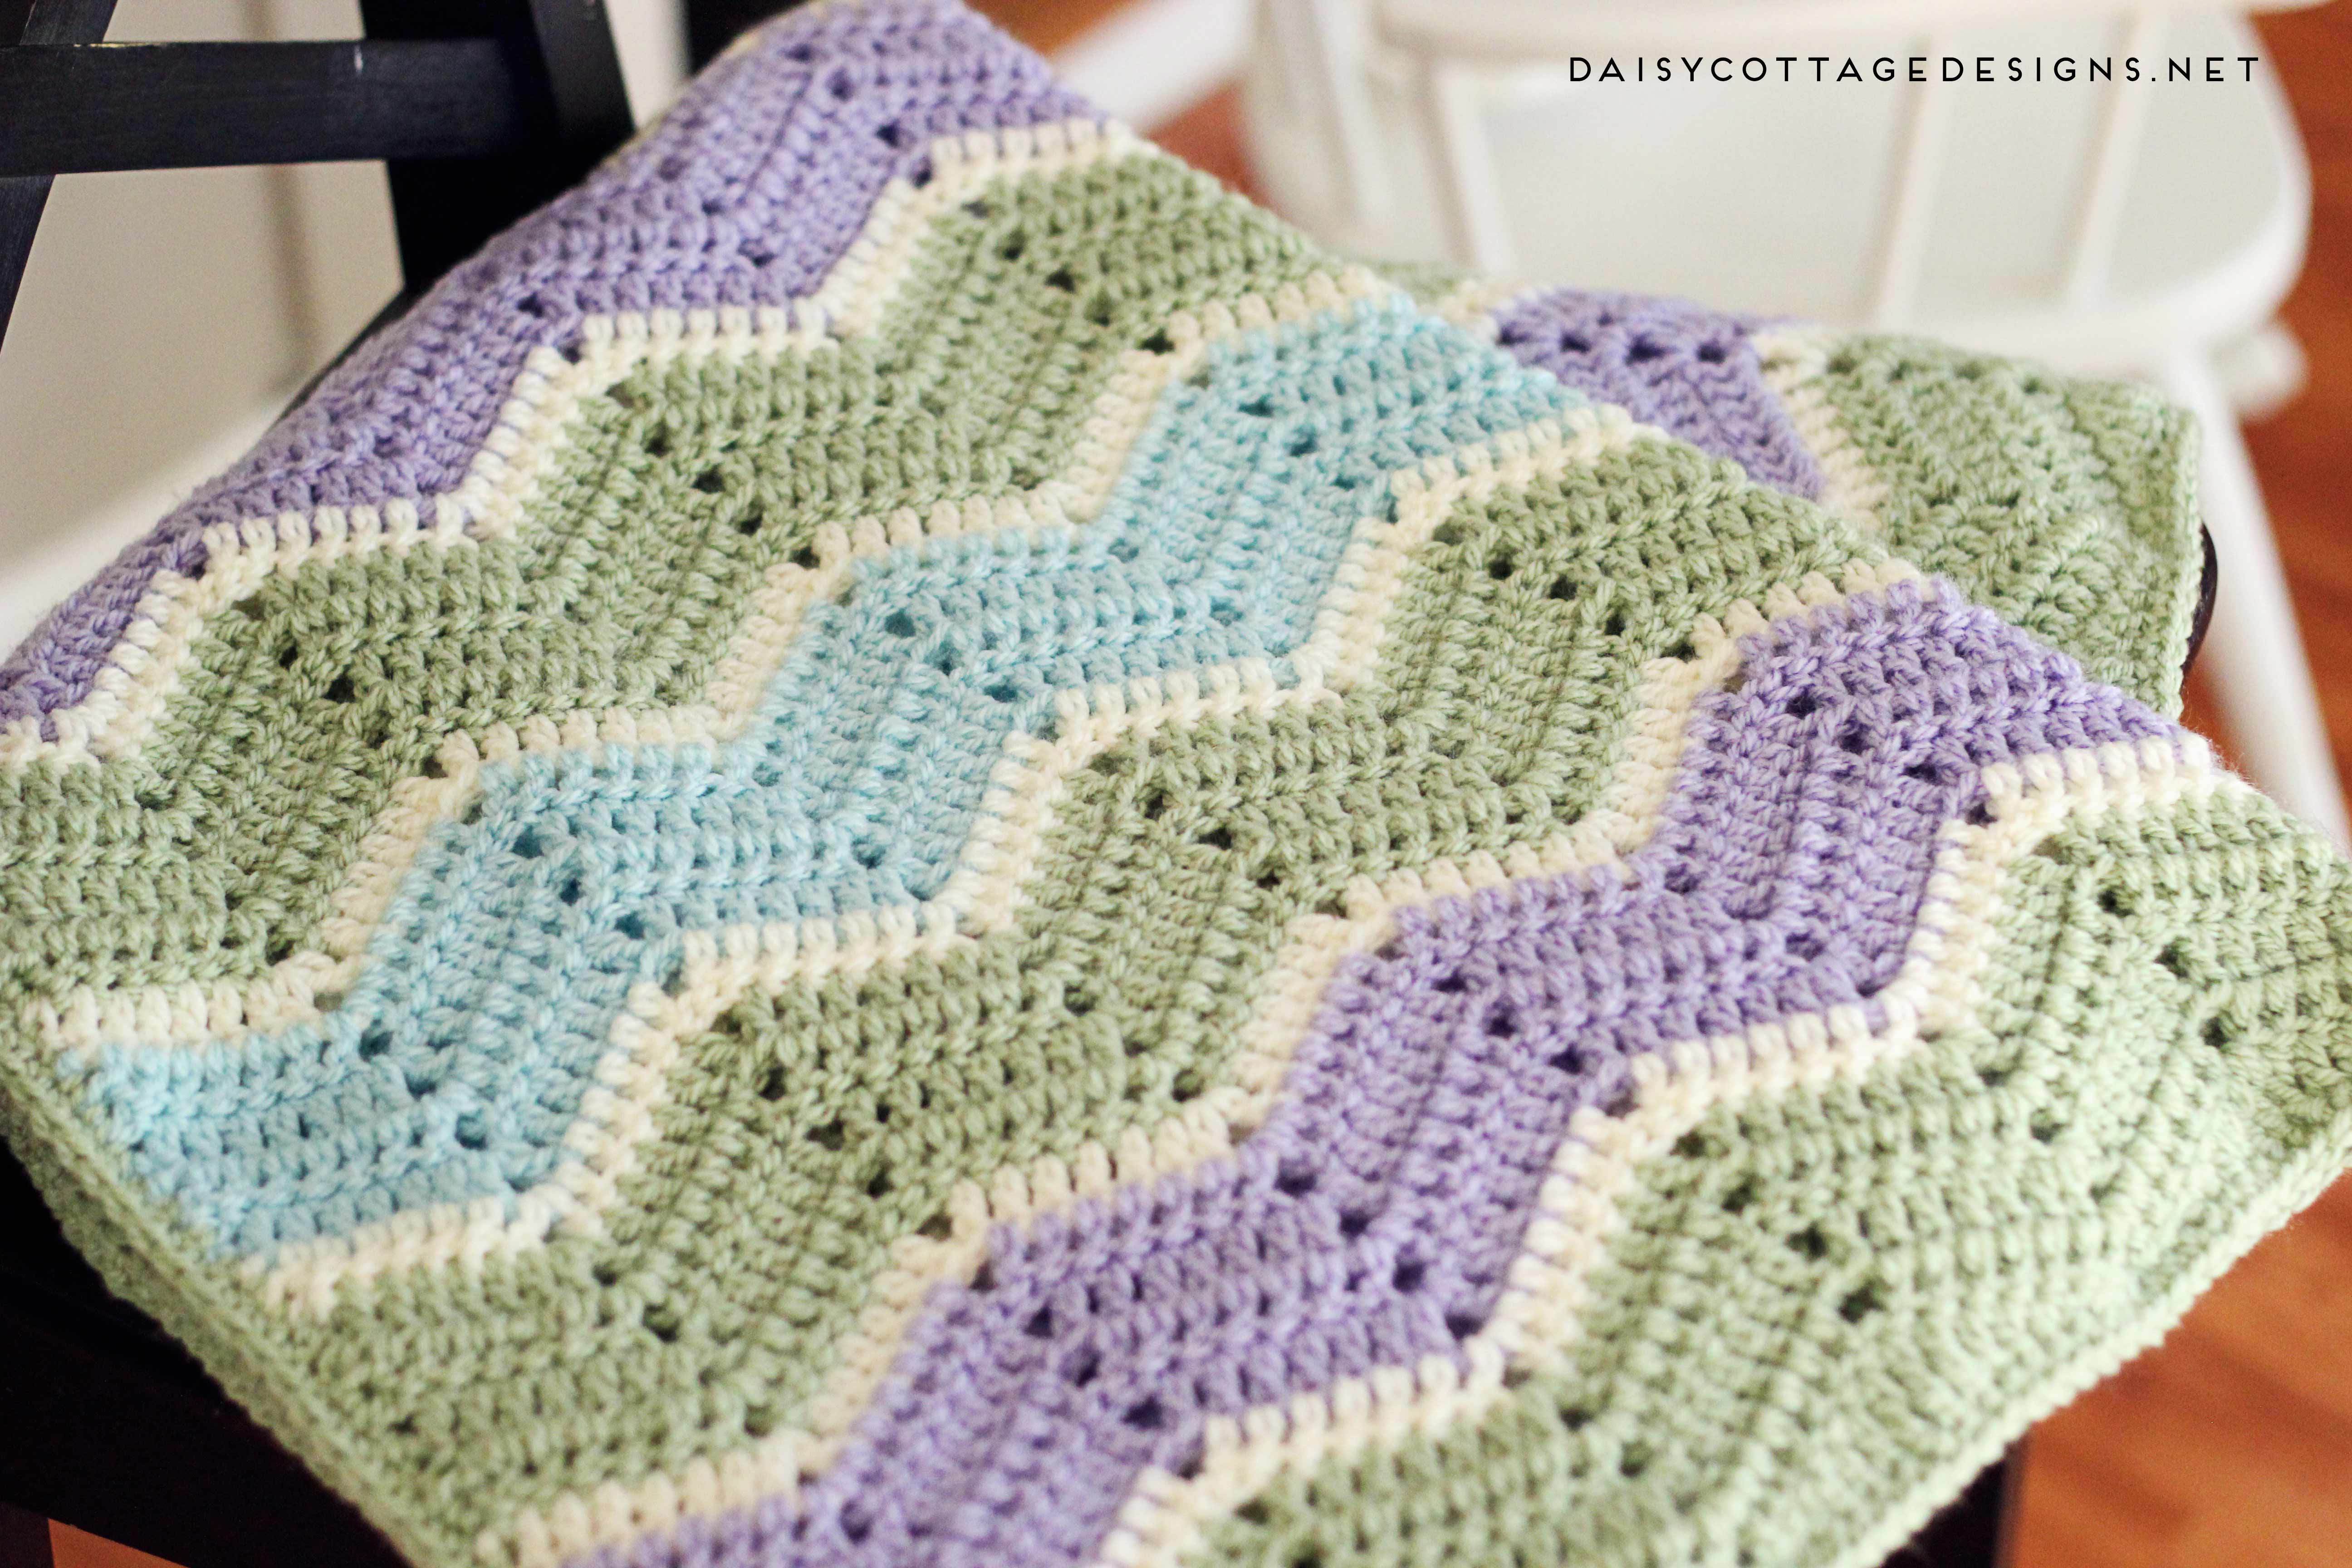 Crochet Ripple Afghan Patterns Easy Chevron Blanket Crochet Pattern Daisy Cottage Designs